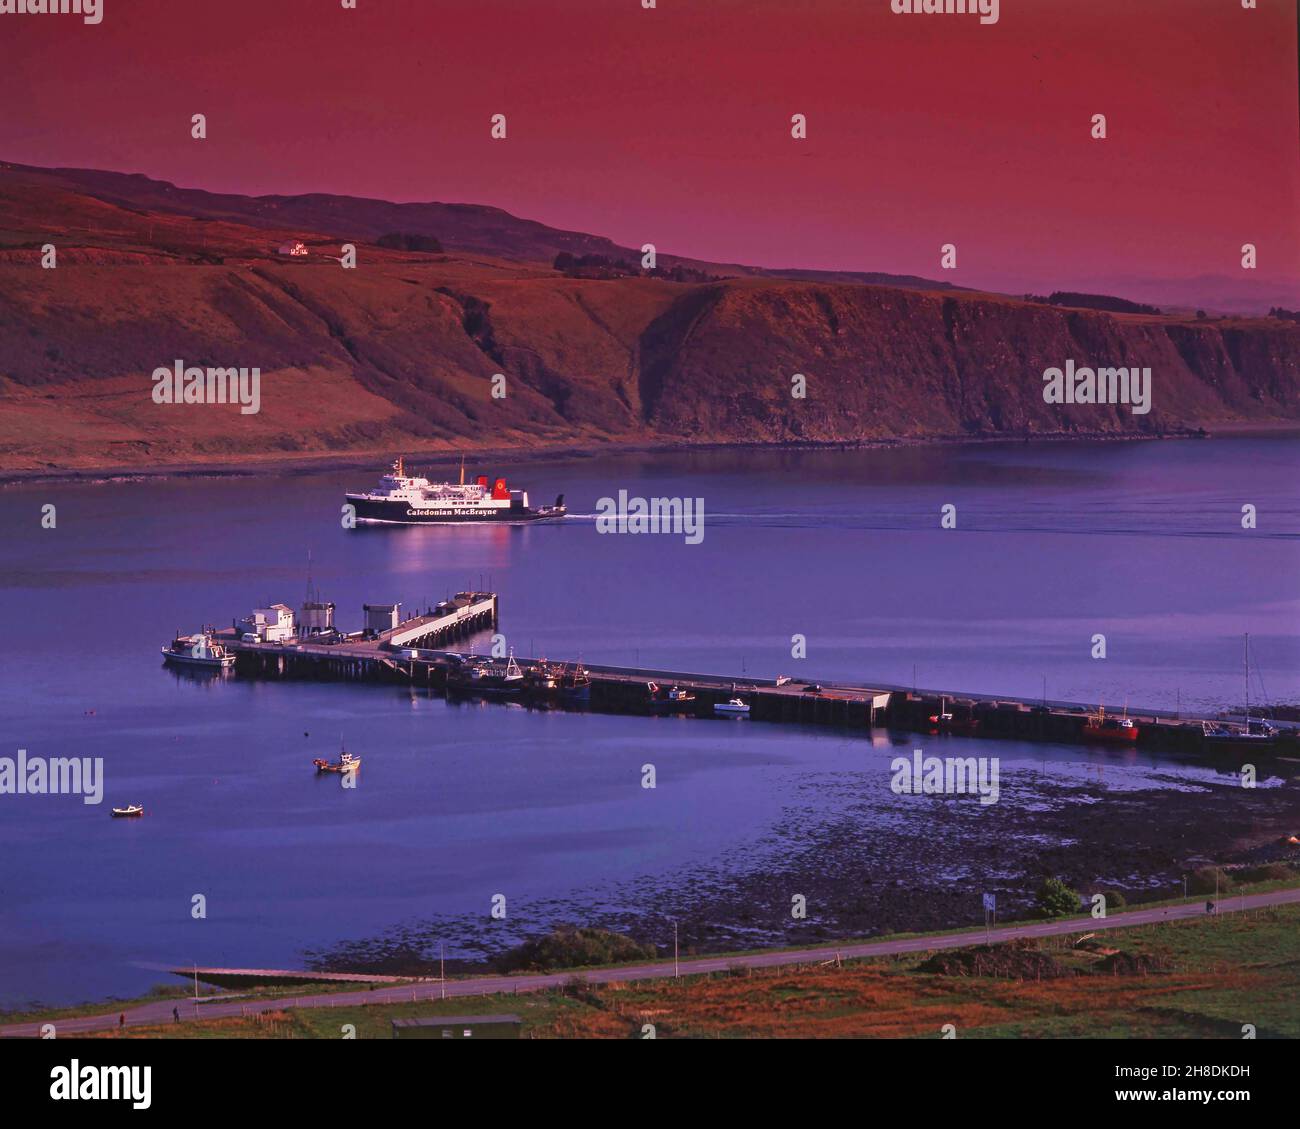 The MV Hebridean Isles arriving at Uig at Sunset, Skye 1990's. Stock Photo